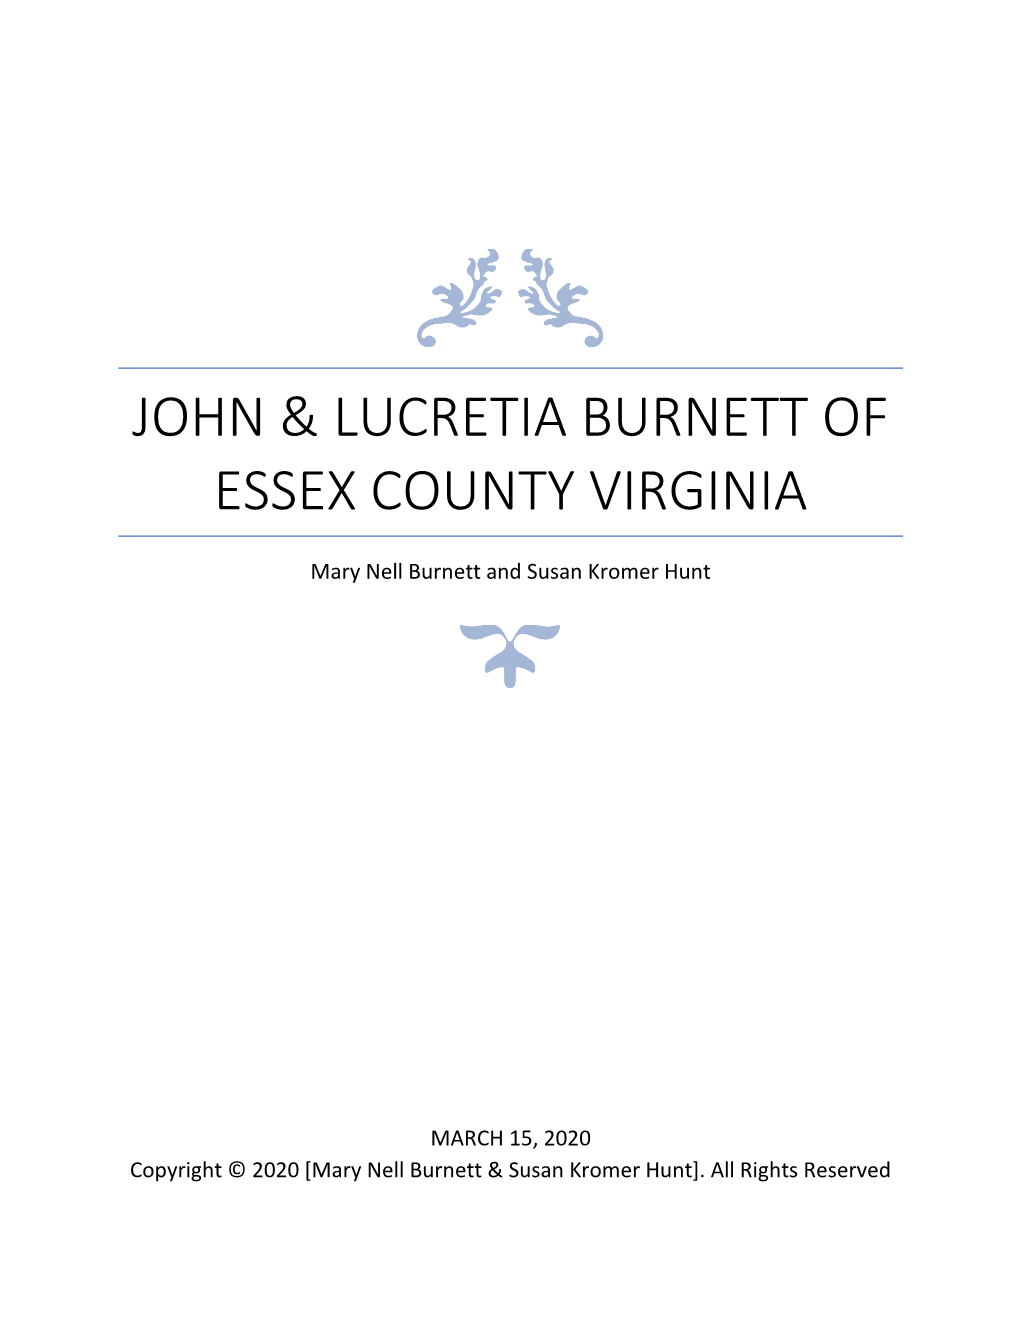 John & Lucretia Burnett of Essex County Virginia